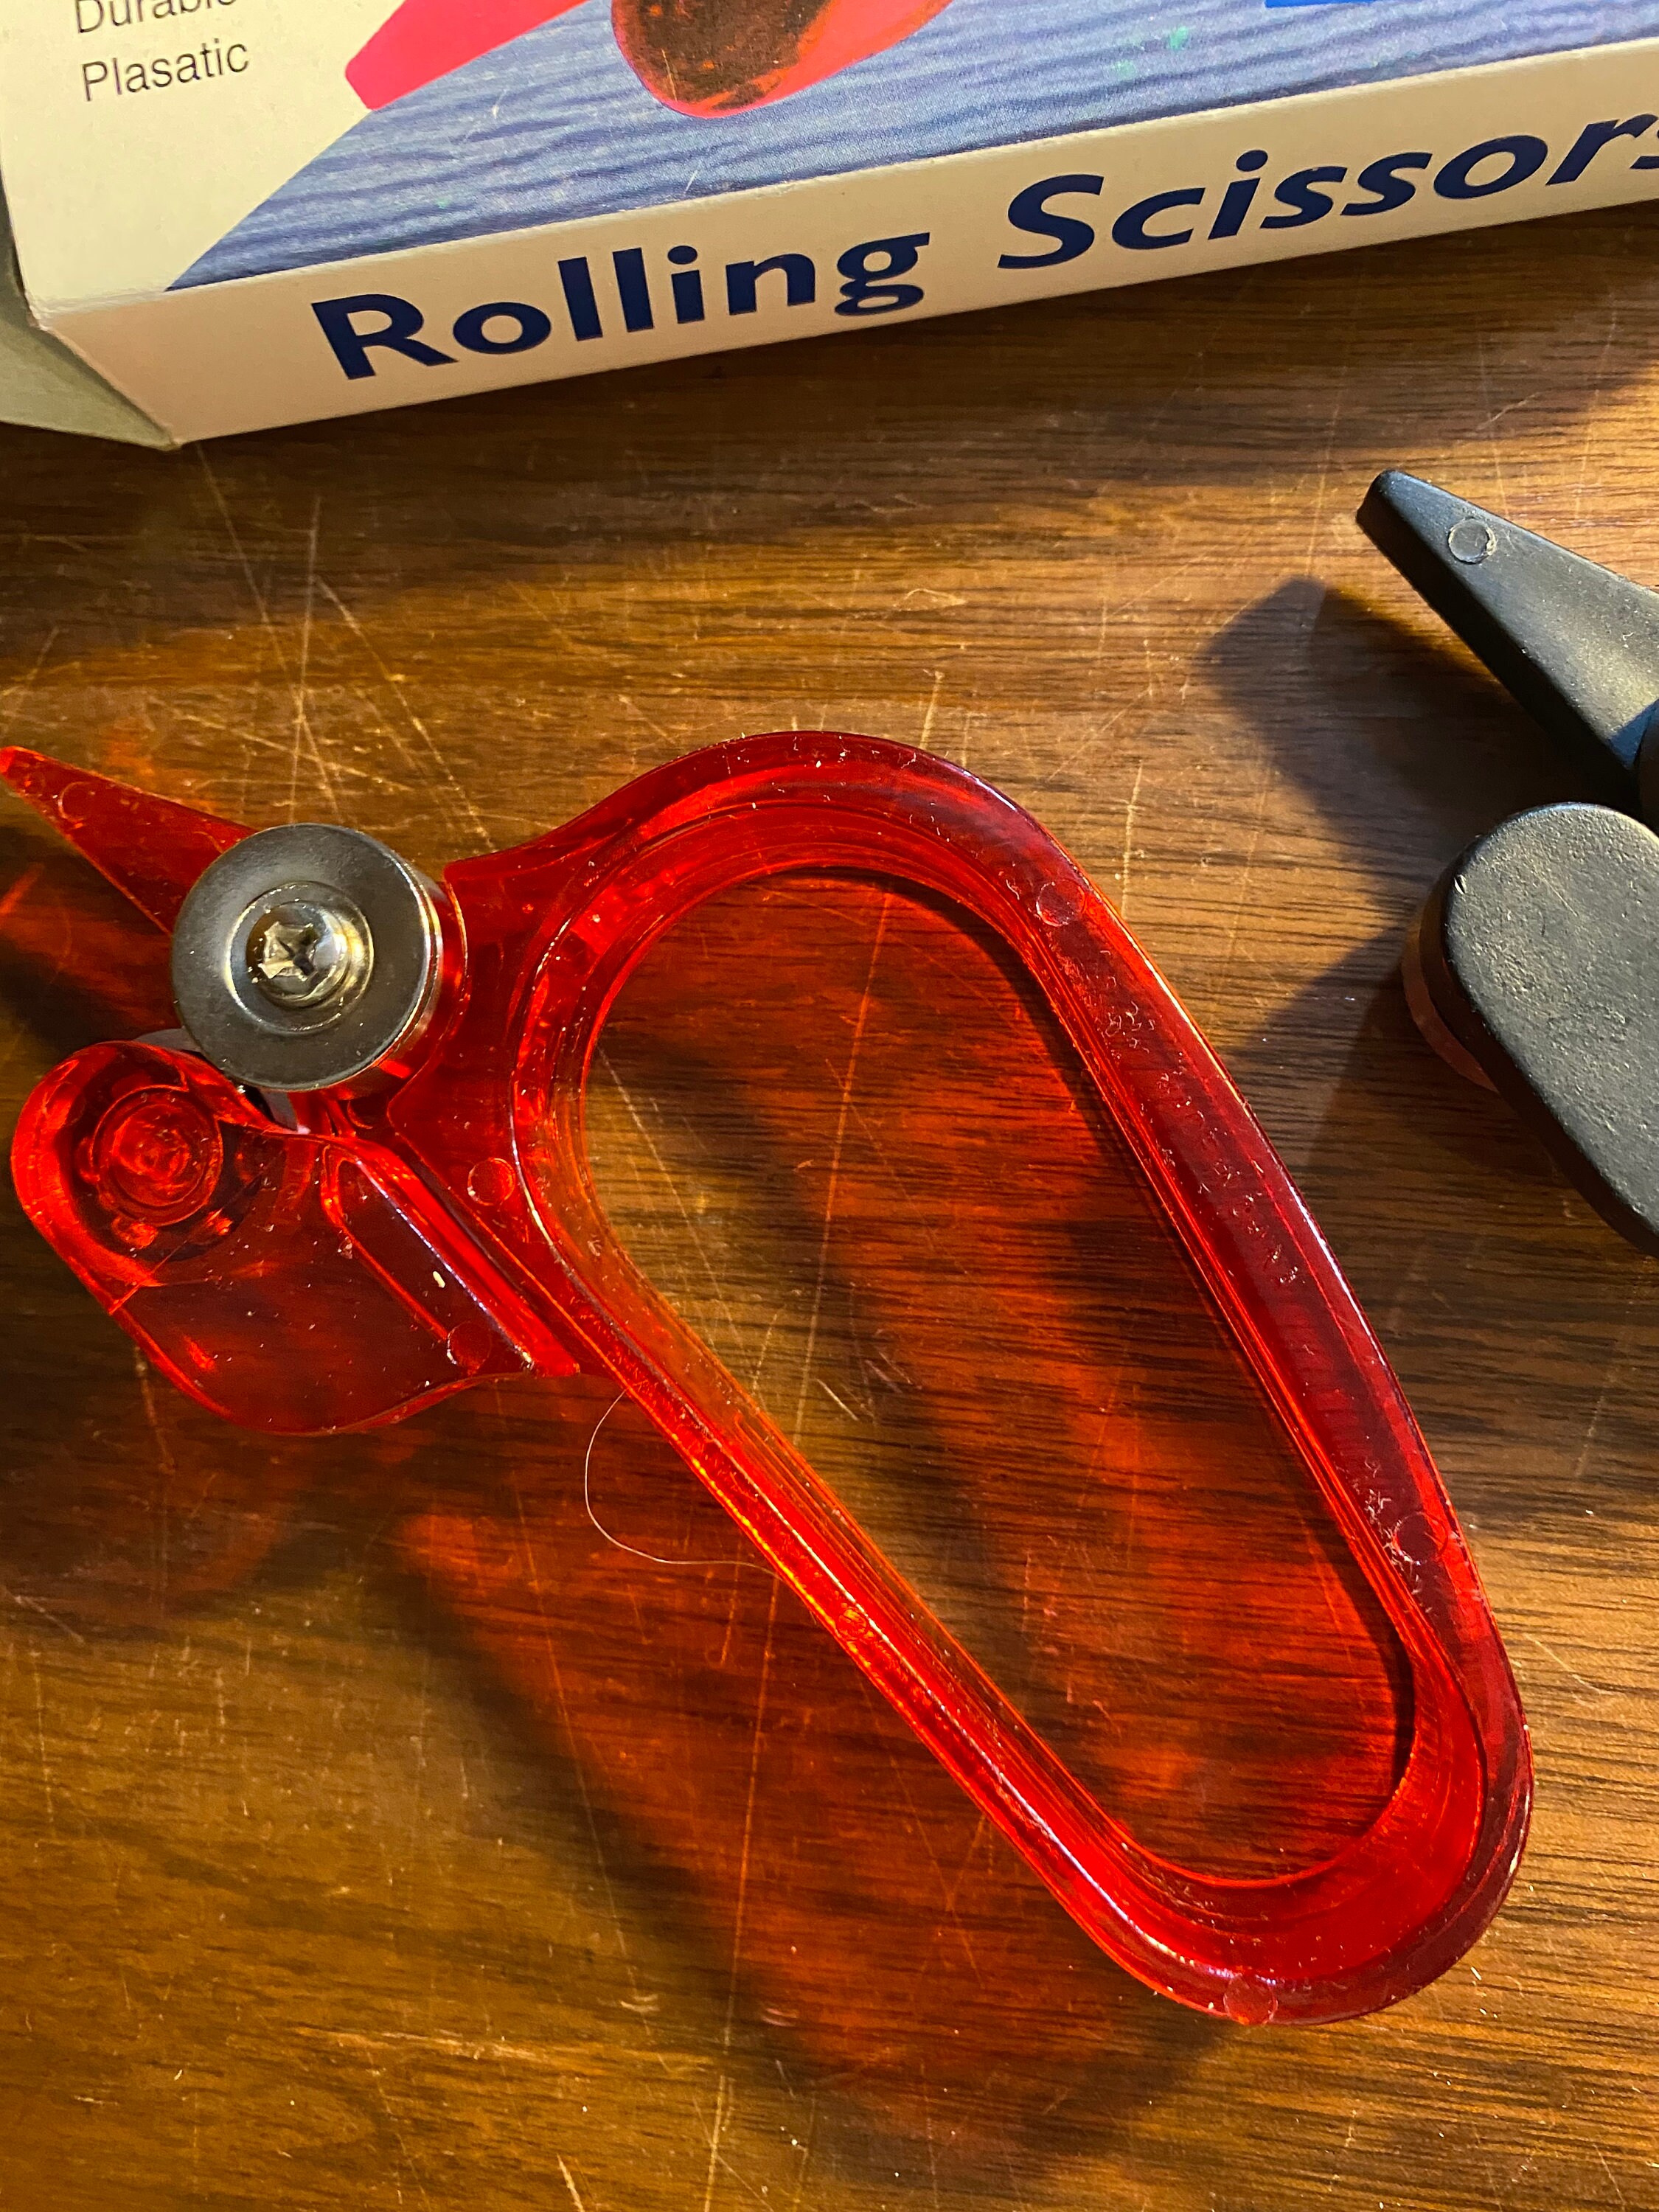 Rolling Scissors Round Blade Paper Cutting Edge Decoupage, Scrapbooking,  Crafting, Photo Album Choose Color 